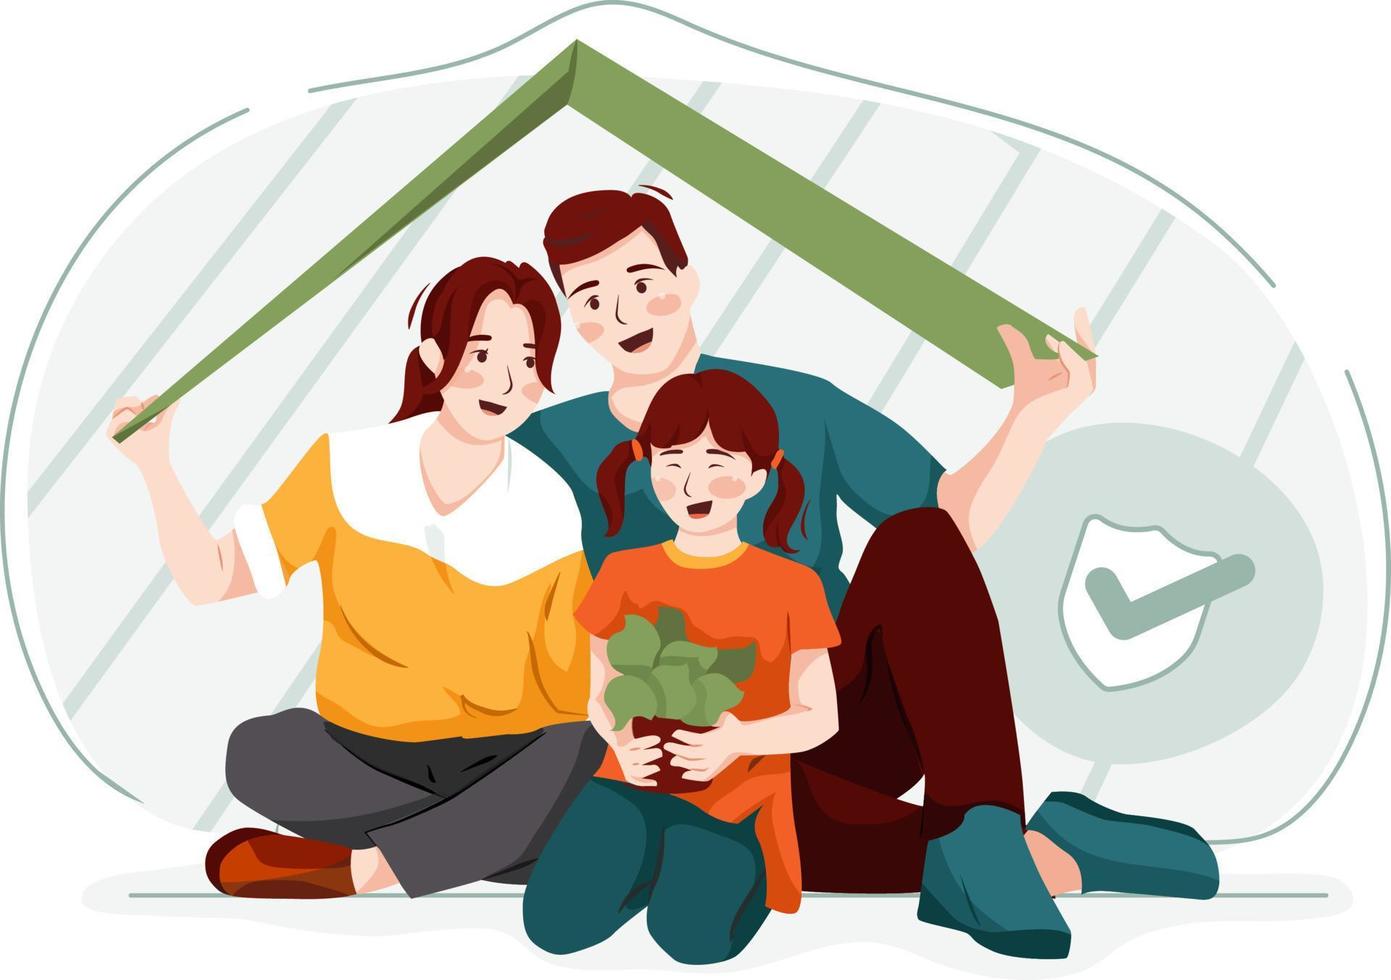 Family insurance Illustration vector